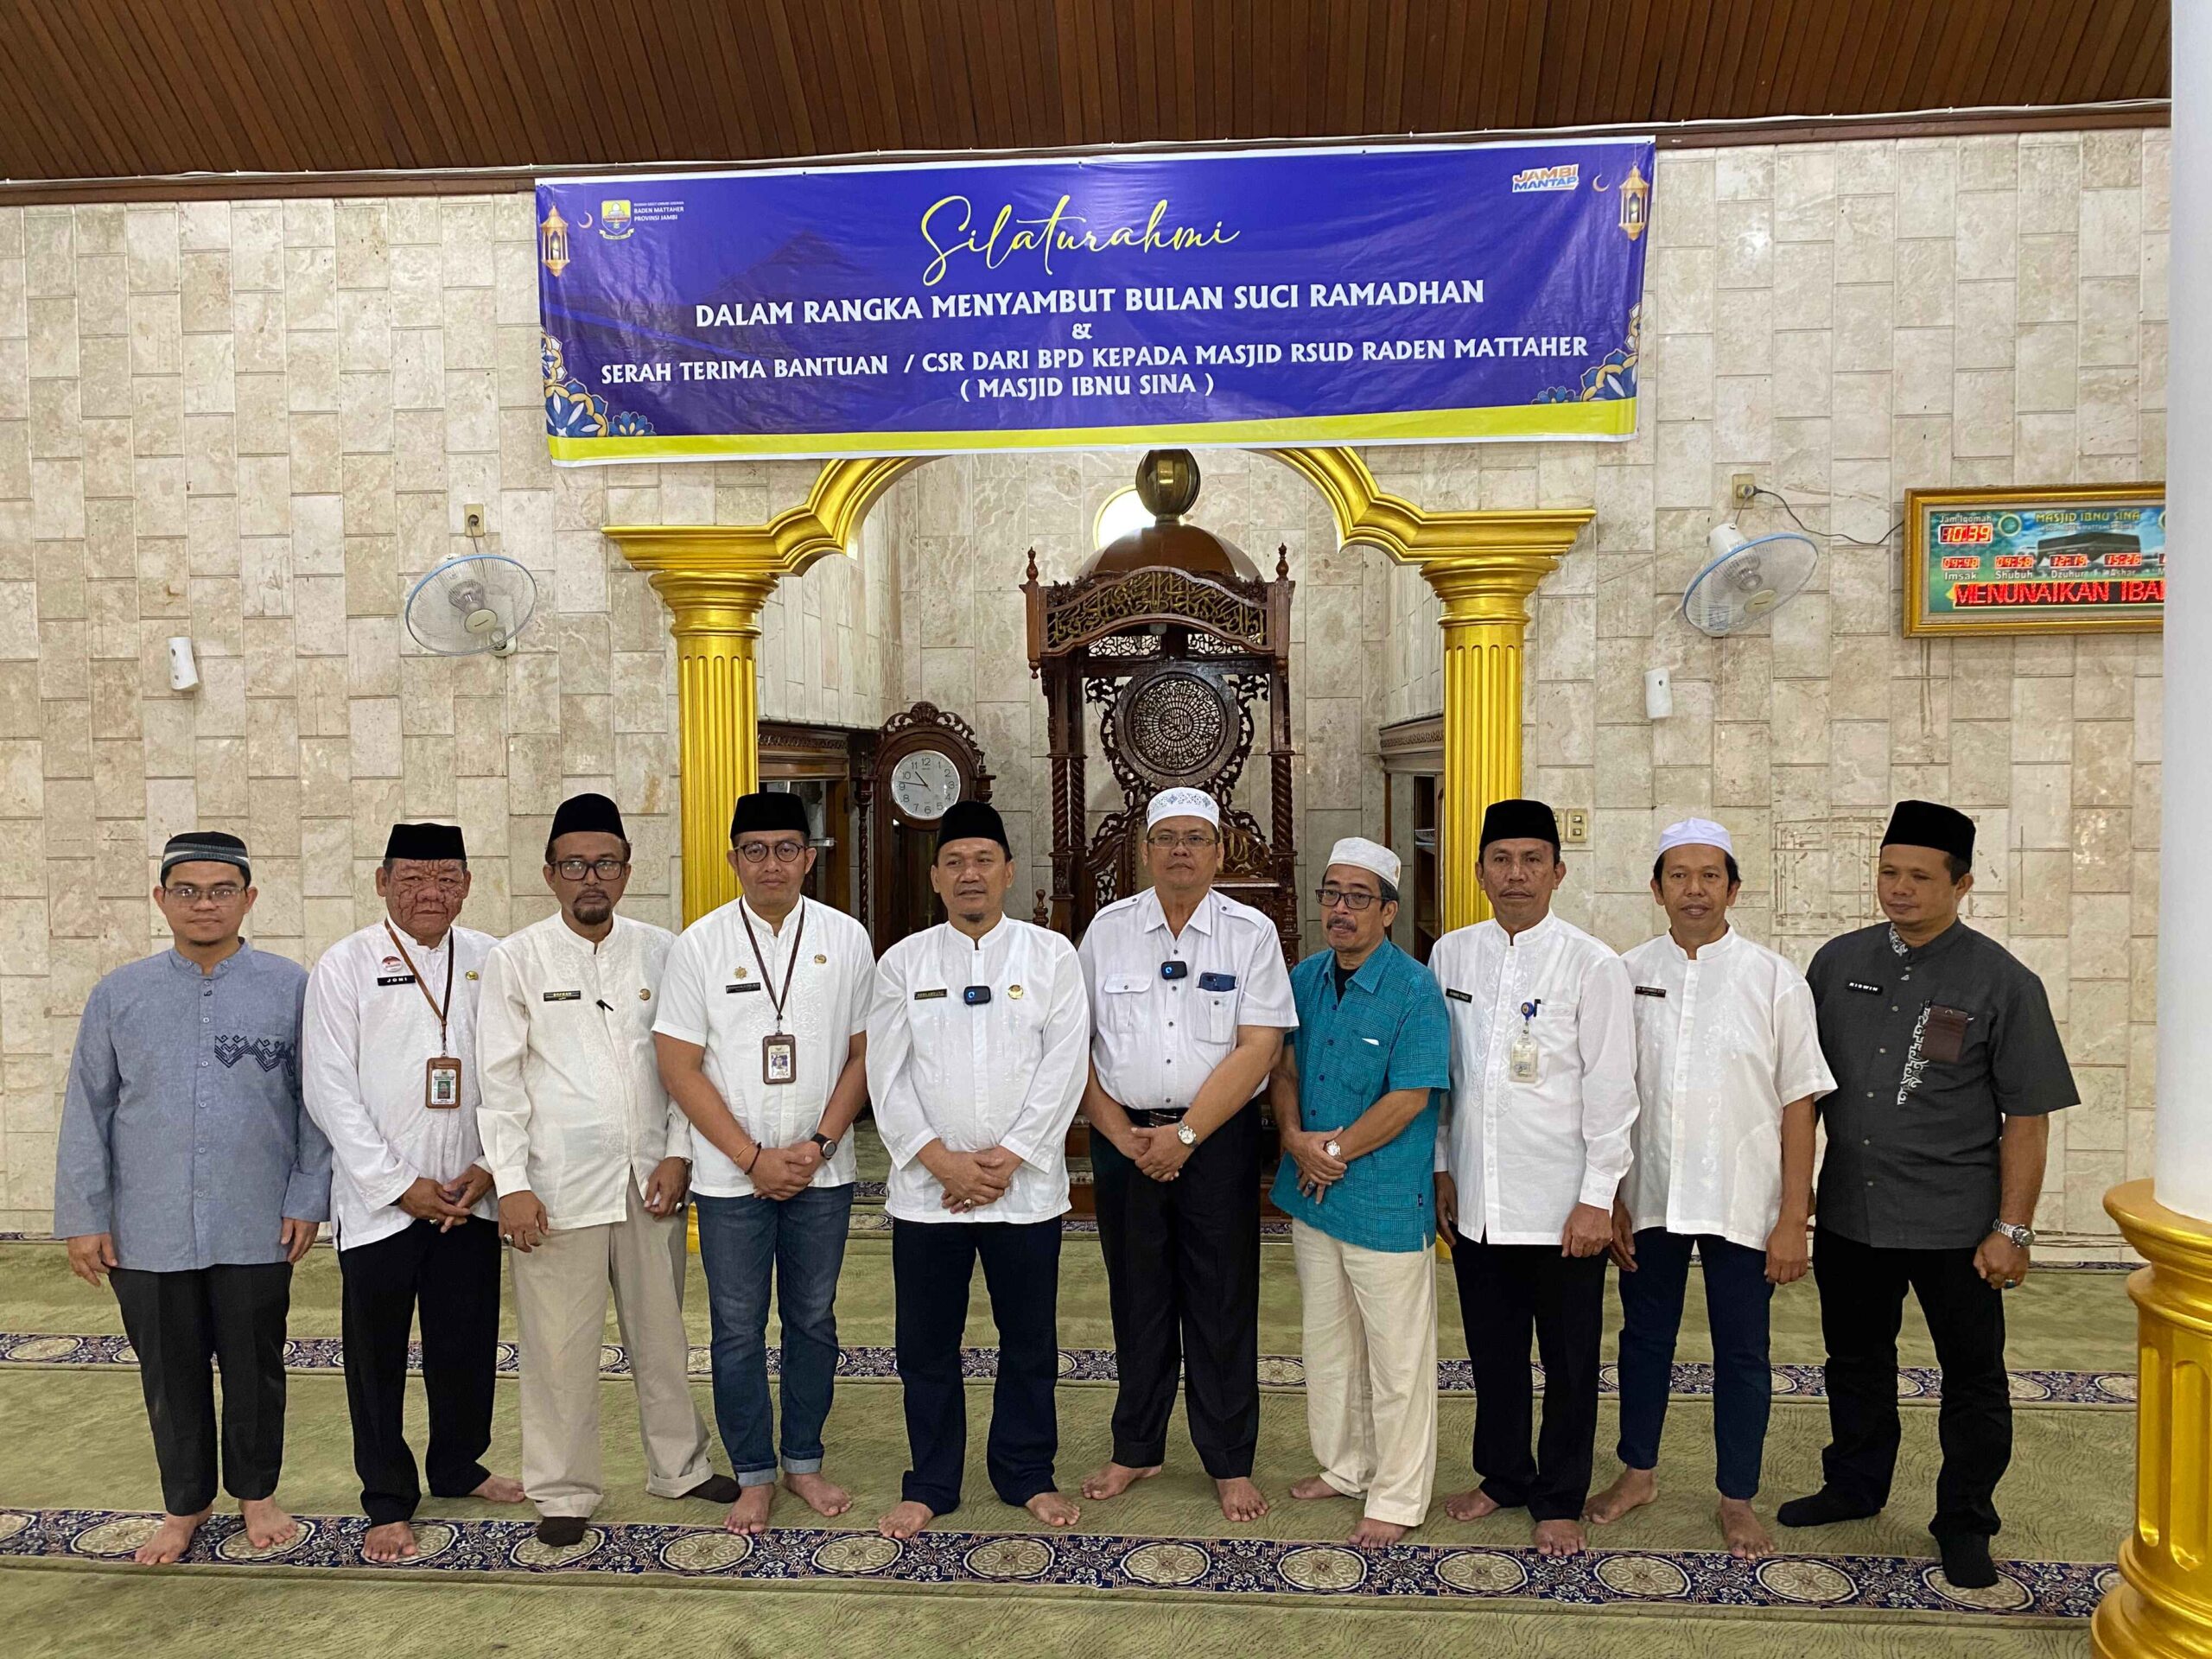 Kegiatan Silaturahmi Dalam Rangka Menyambut Bulan Suci Ramadhan 1445 H RSUD Raden Mattaher Jambi